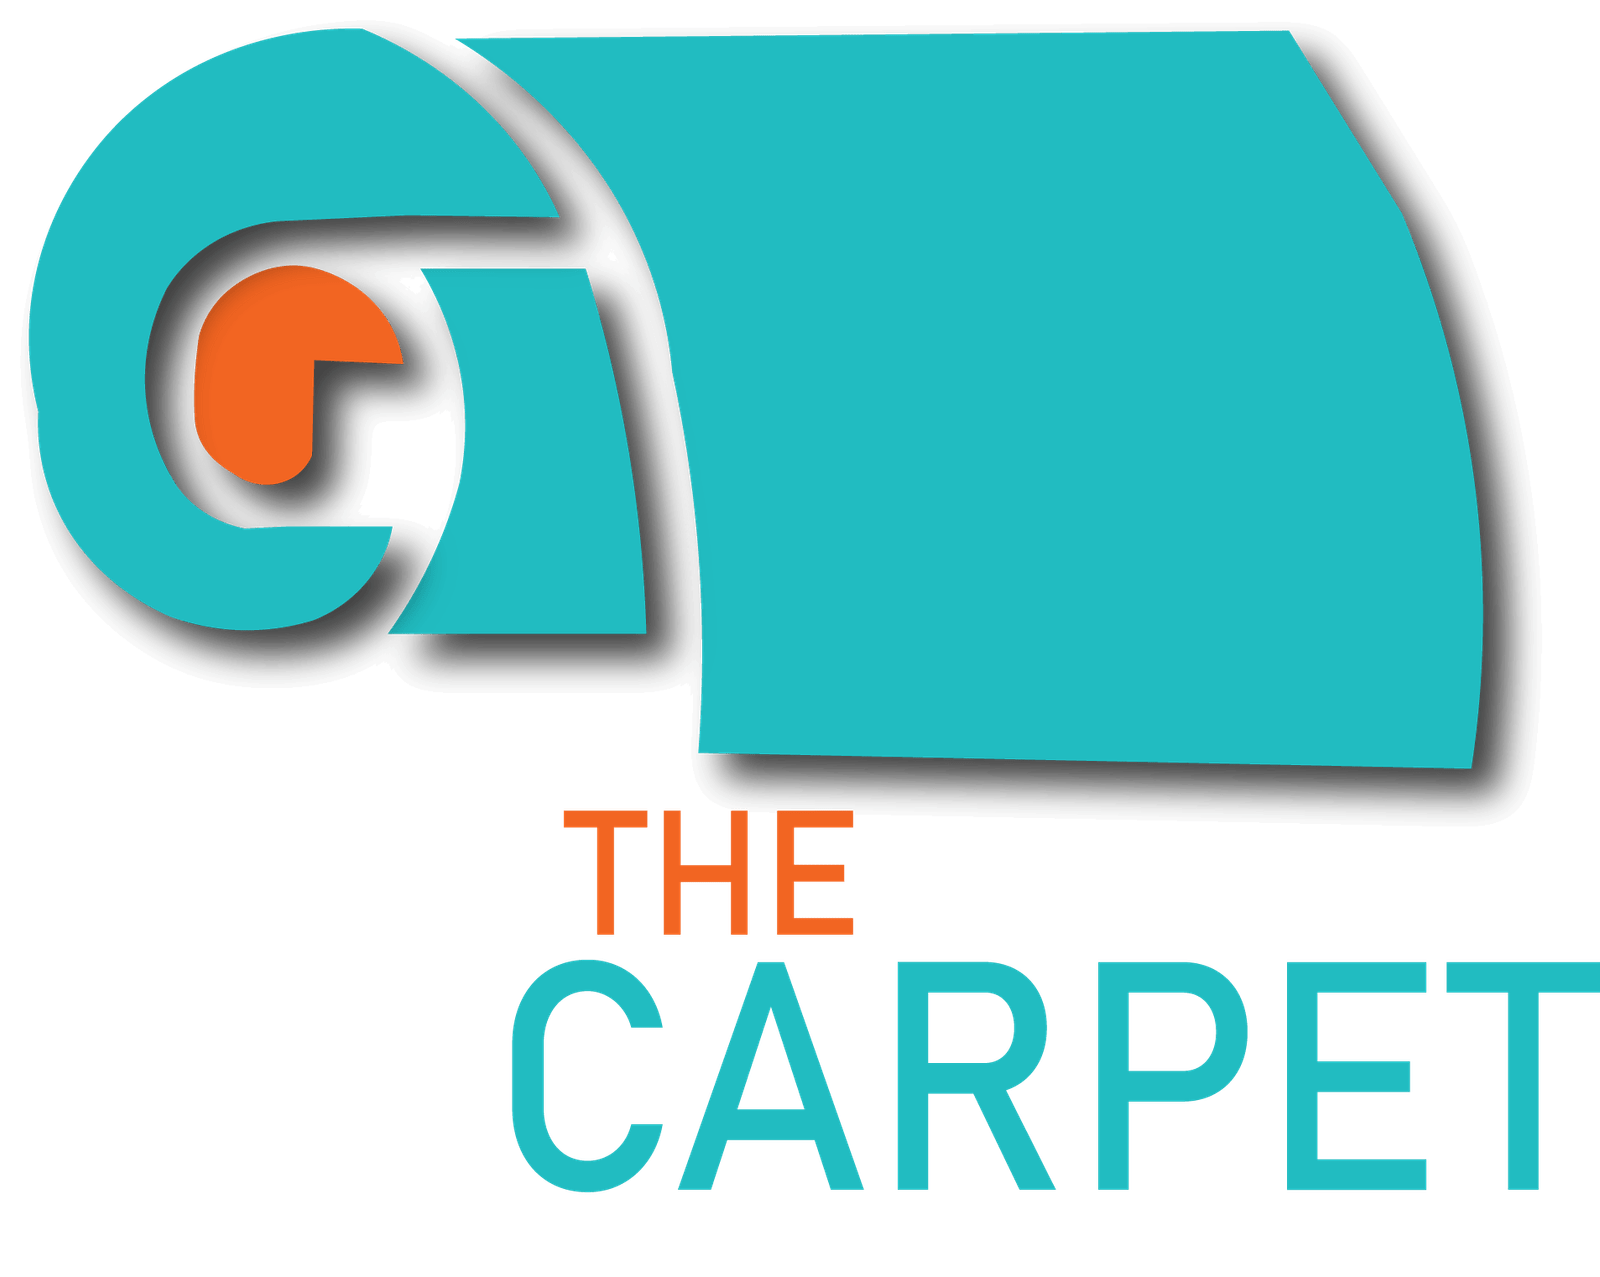 The carpet logo